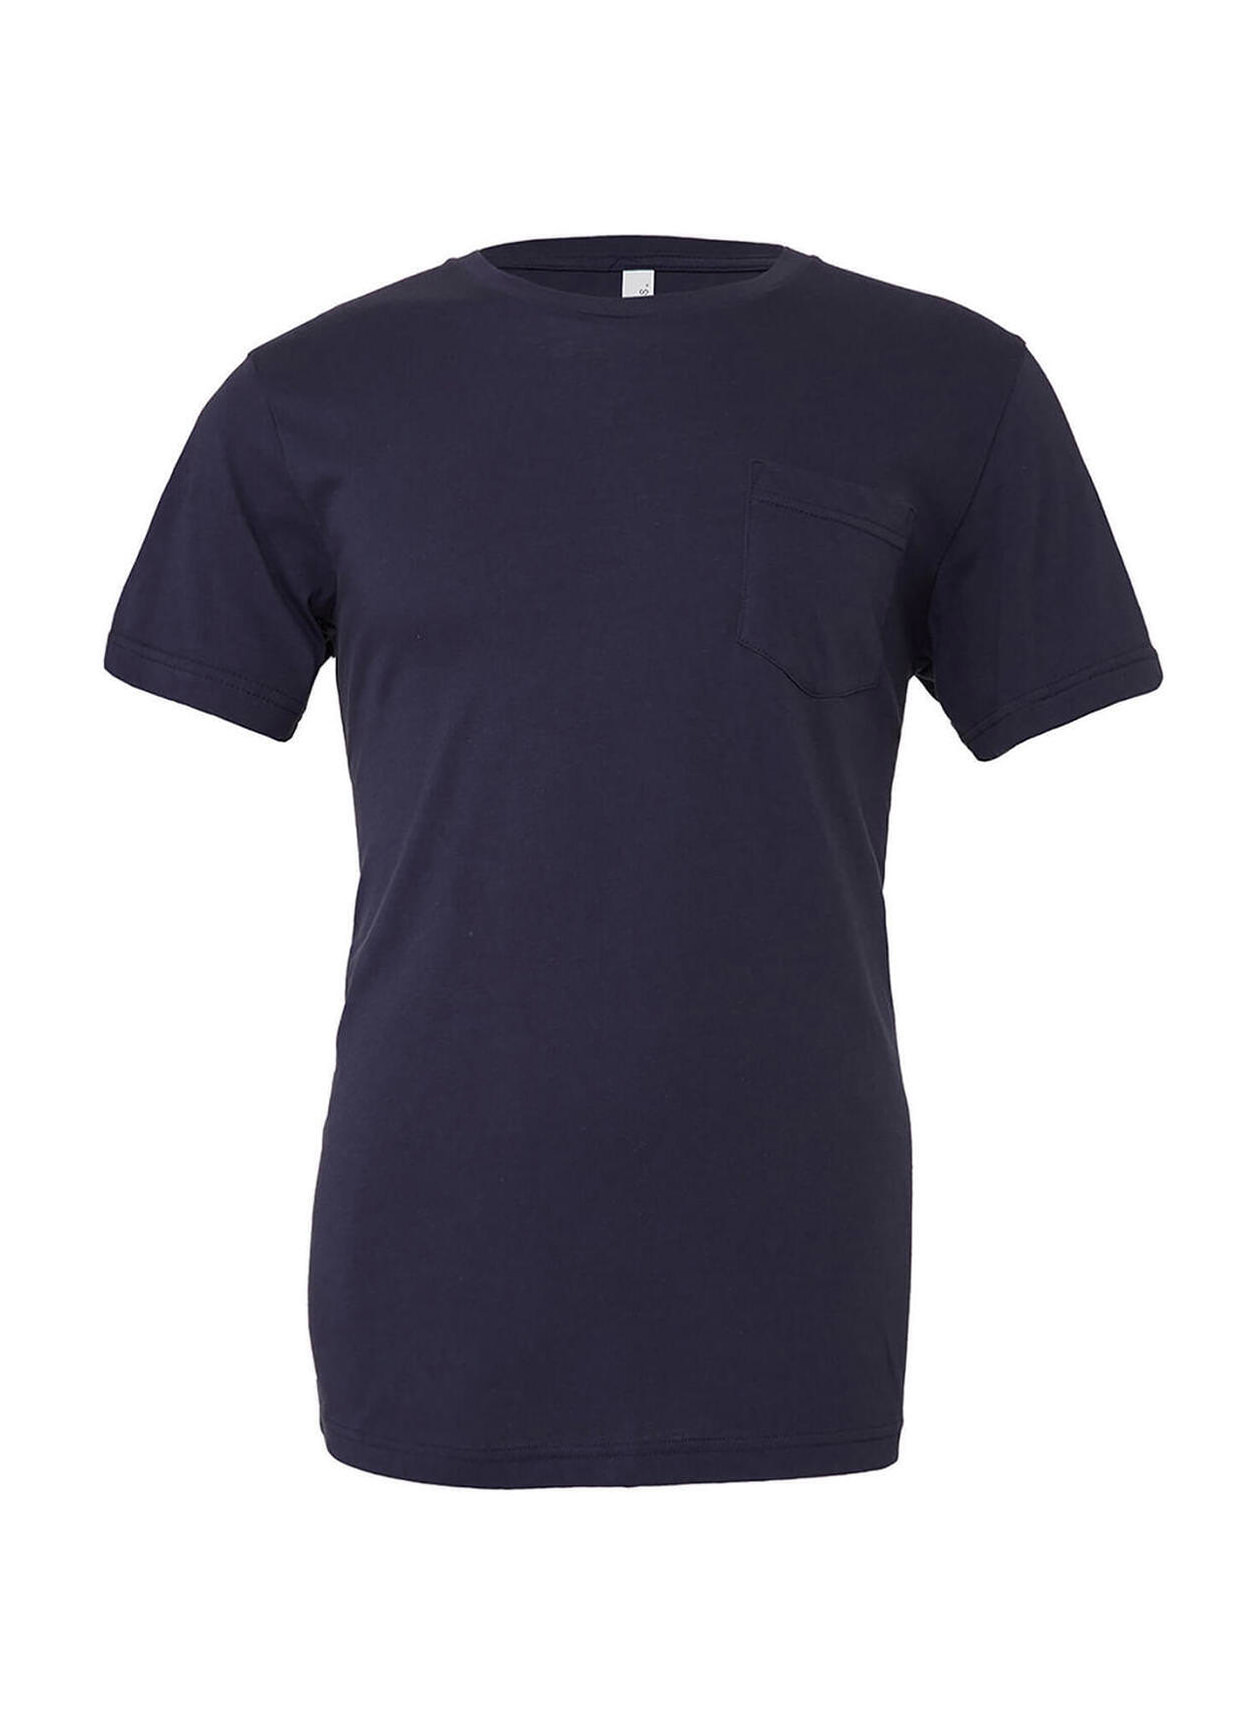 Bella + Canvas Men's Navy Jersey Pocket T-Shirt